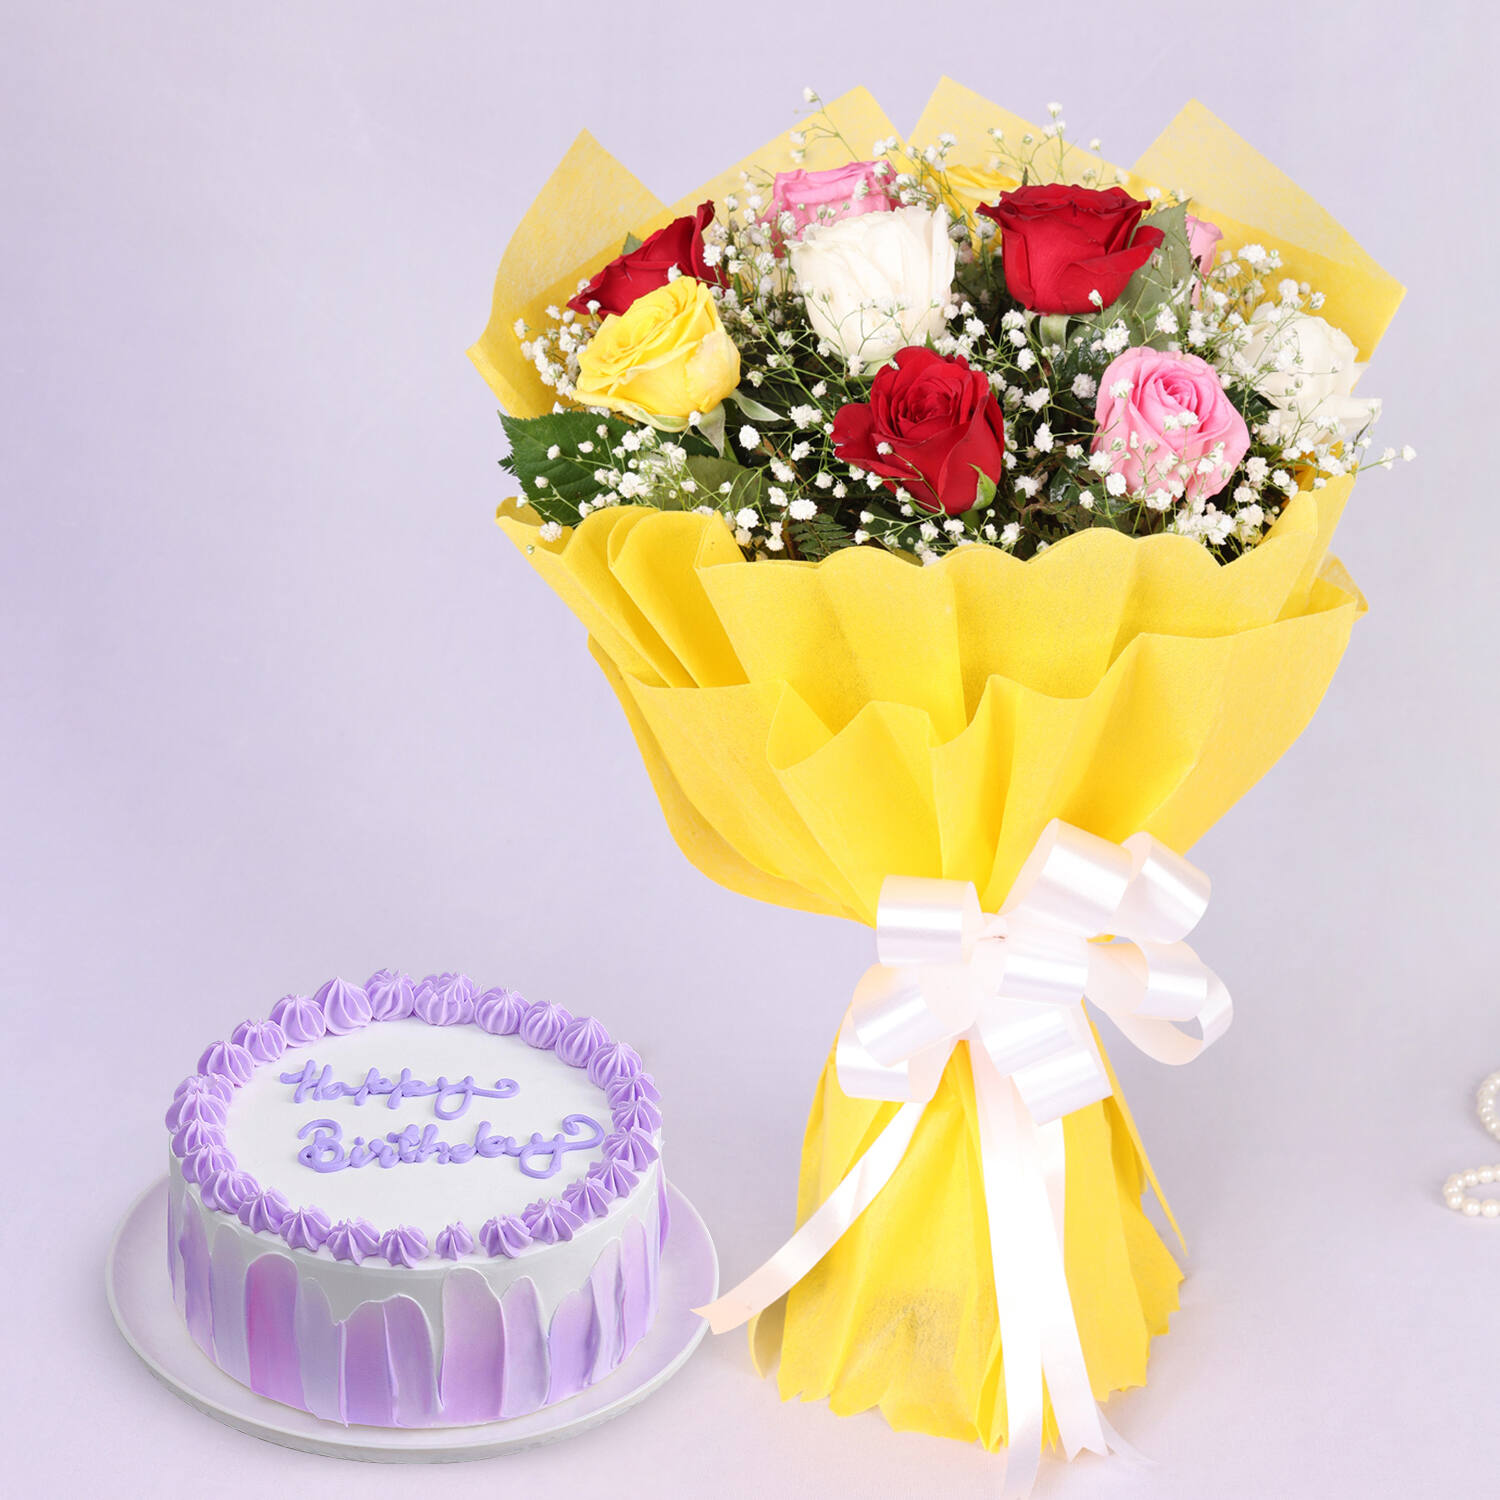 Happy Birthday Gift for Girlfriend, Gift for Girlfriend from Boyfriend |  eBay